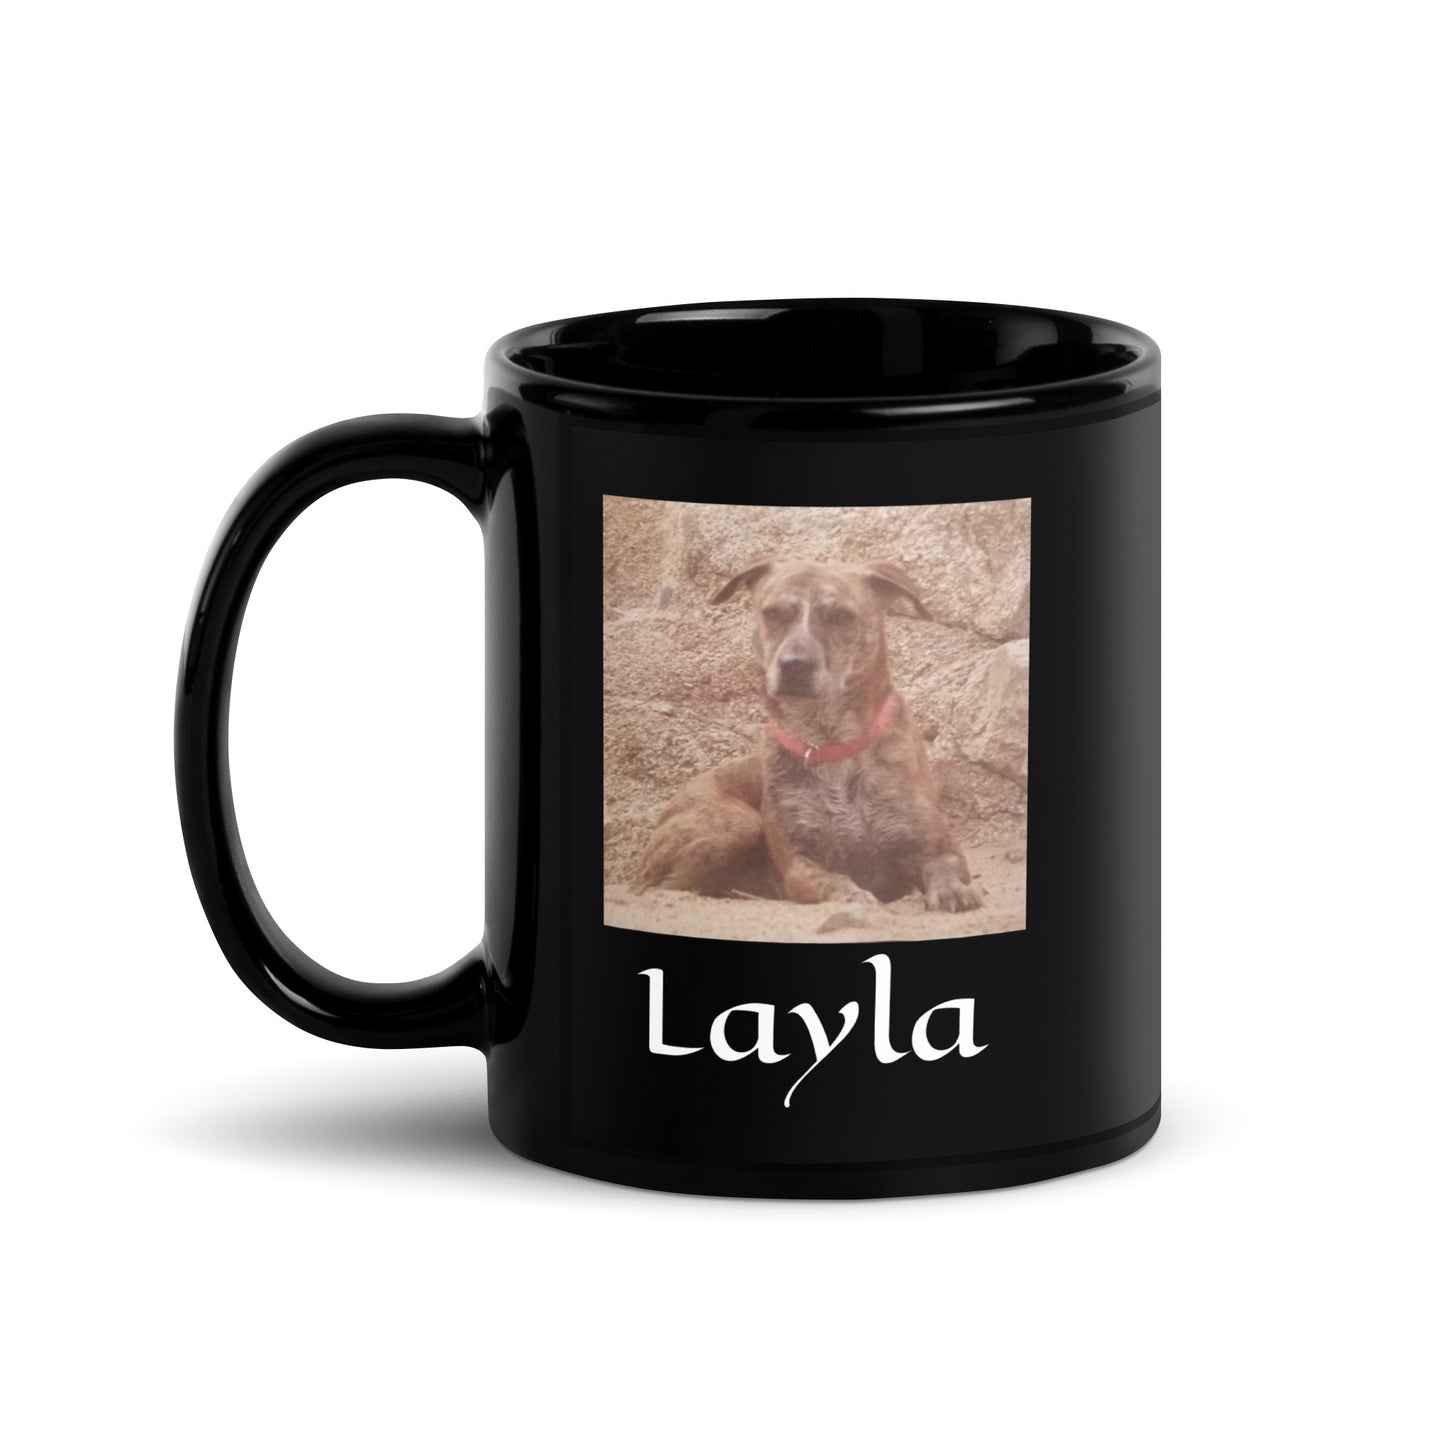 Layla's Mug